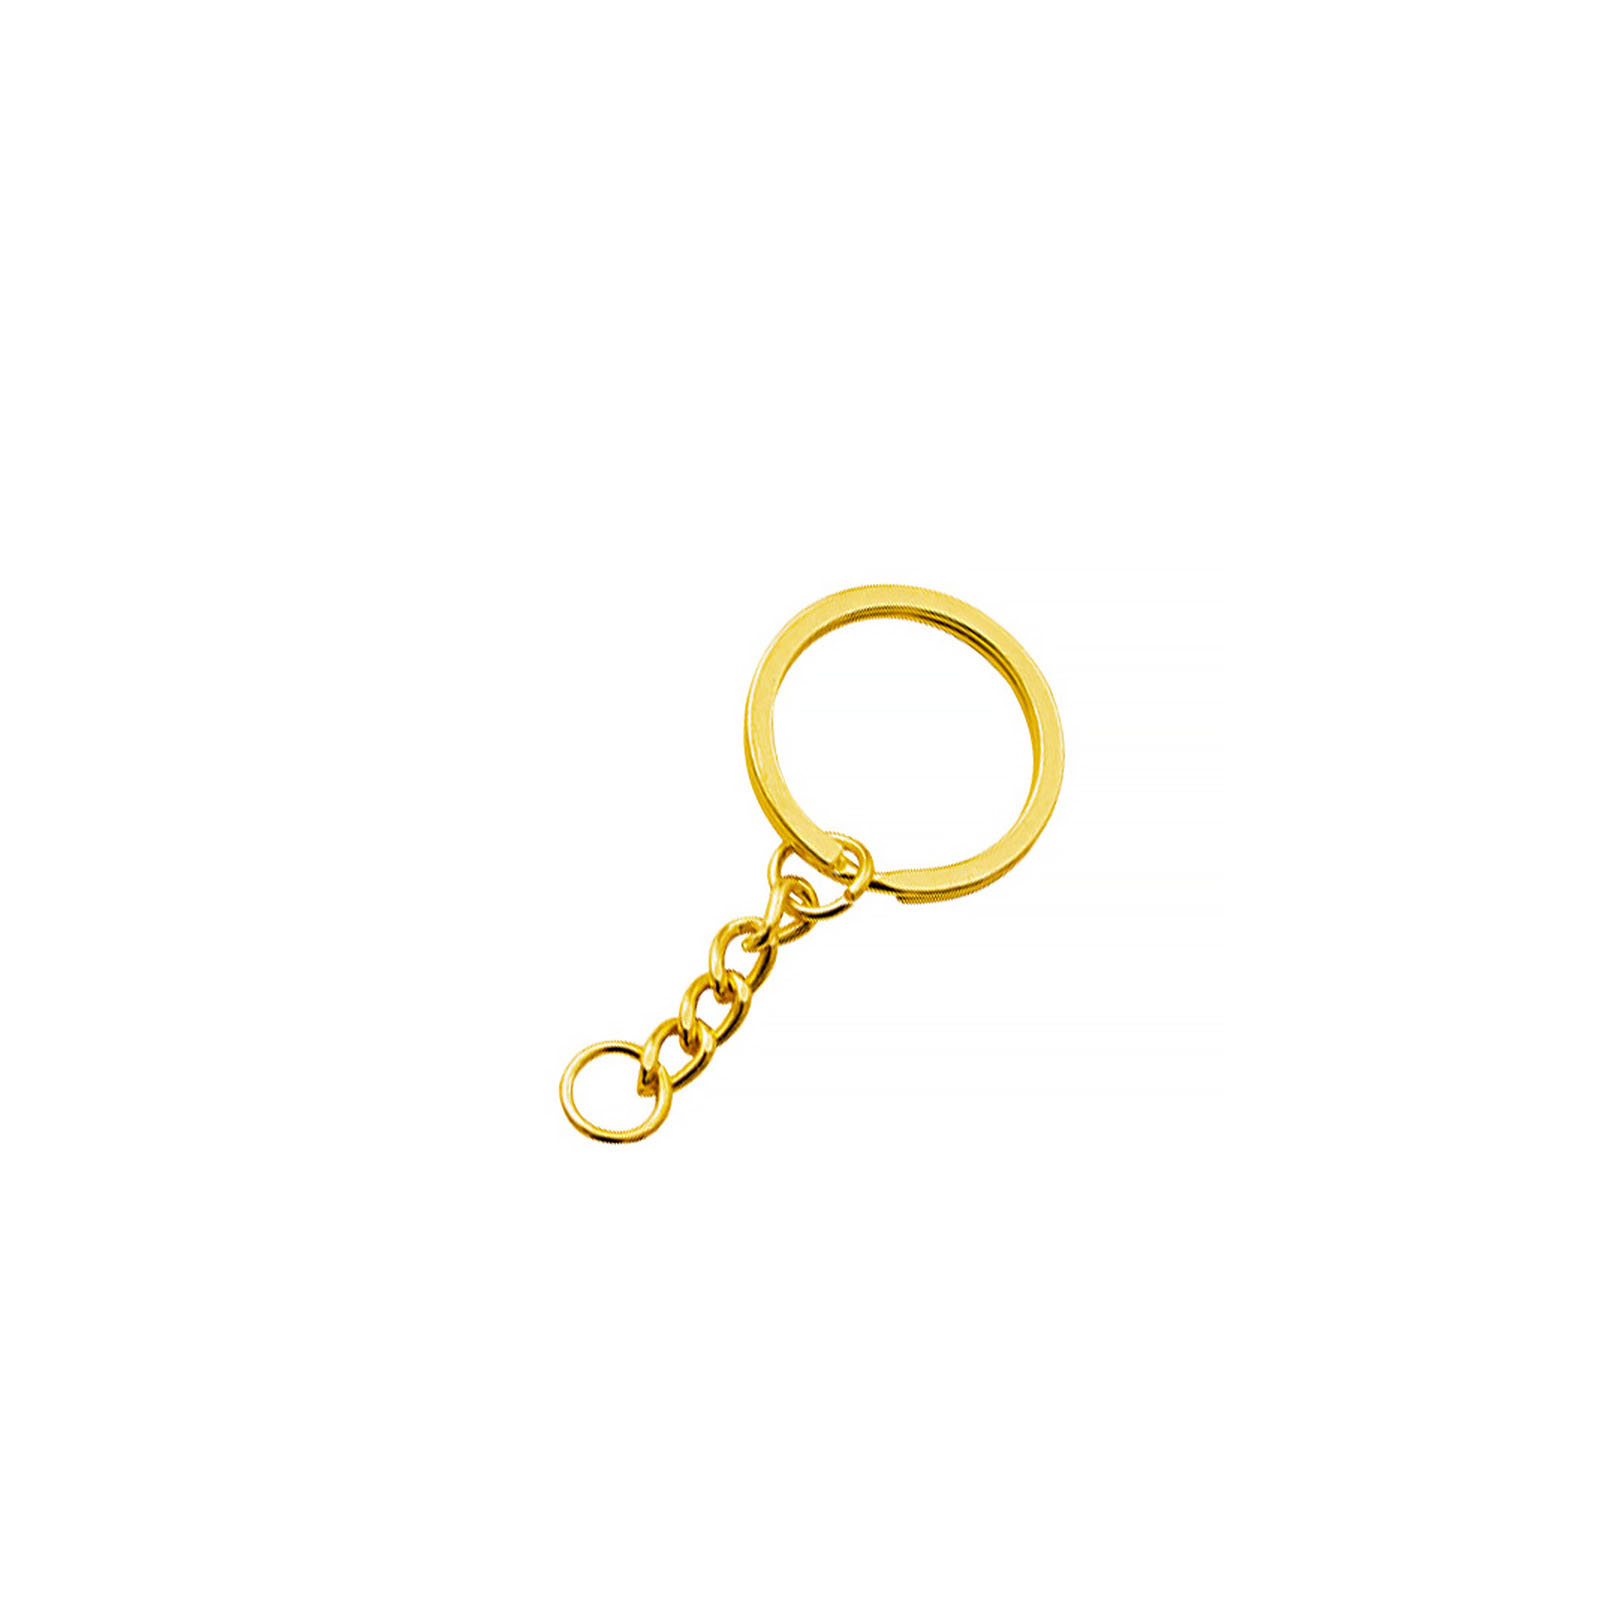 3:2.5 cm key chain (Gold)